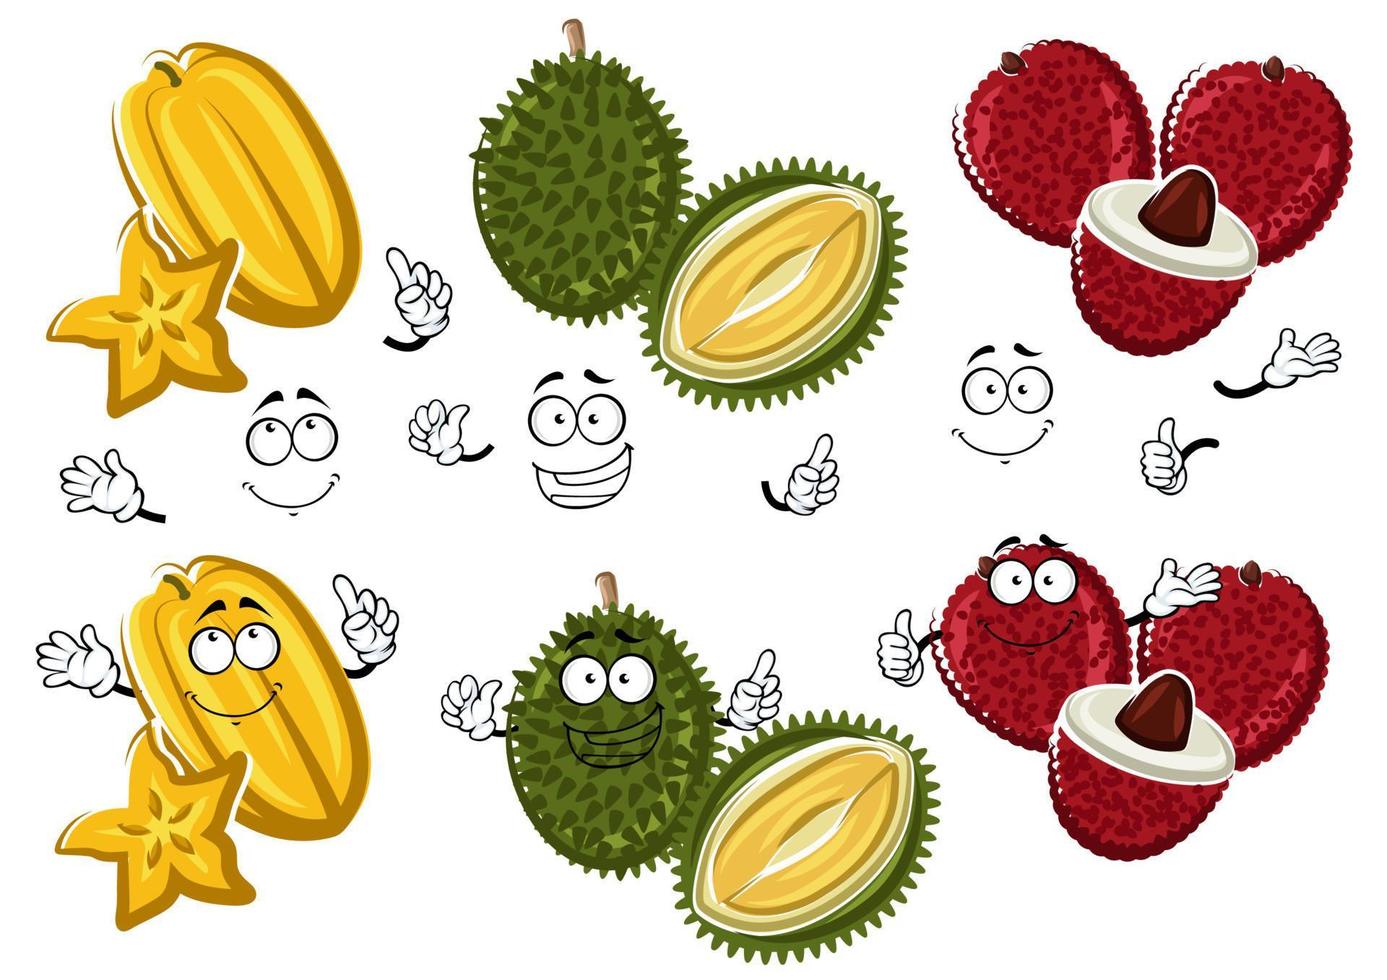 lichias tailandesas dos desenhos animados, frutas durian e carambola vetor